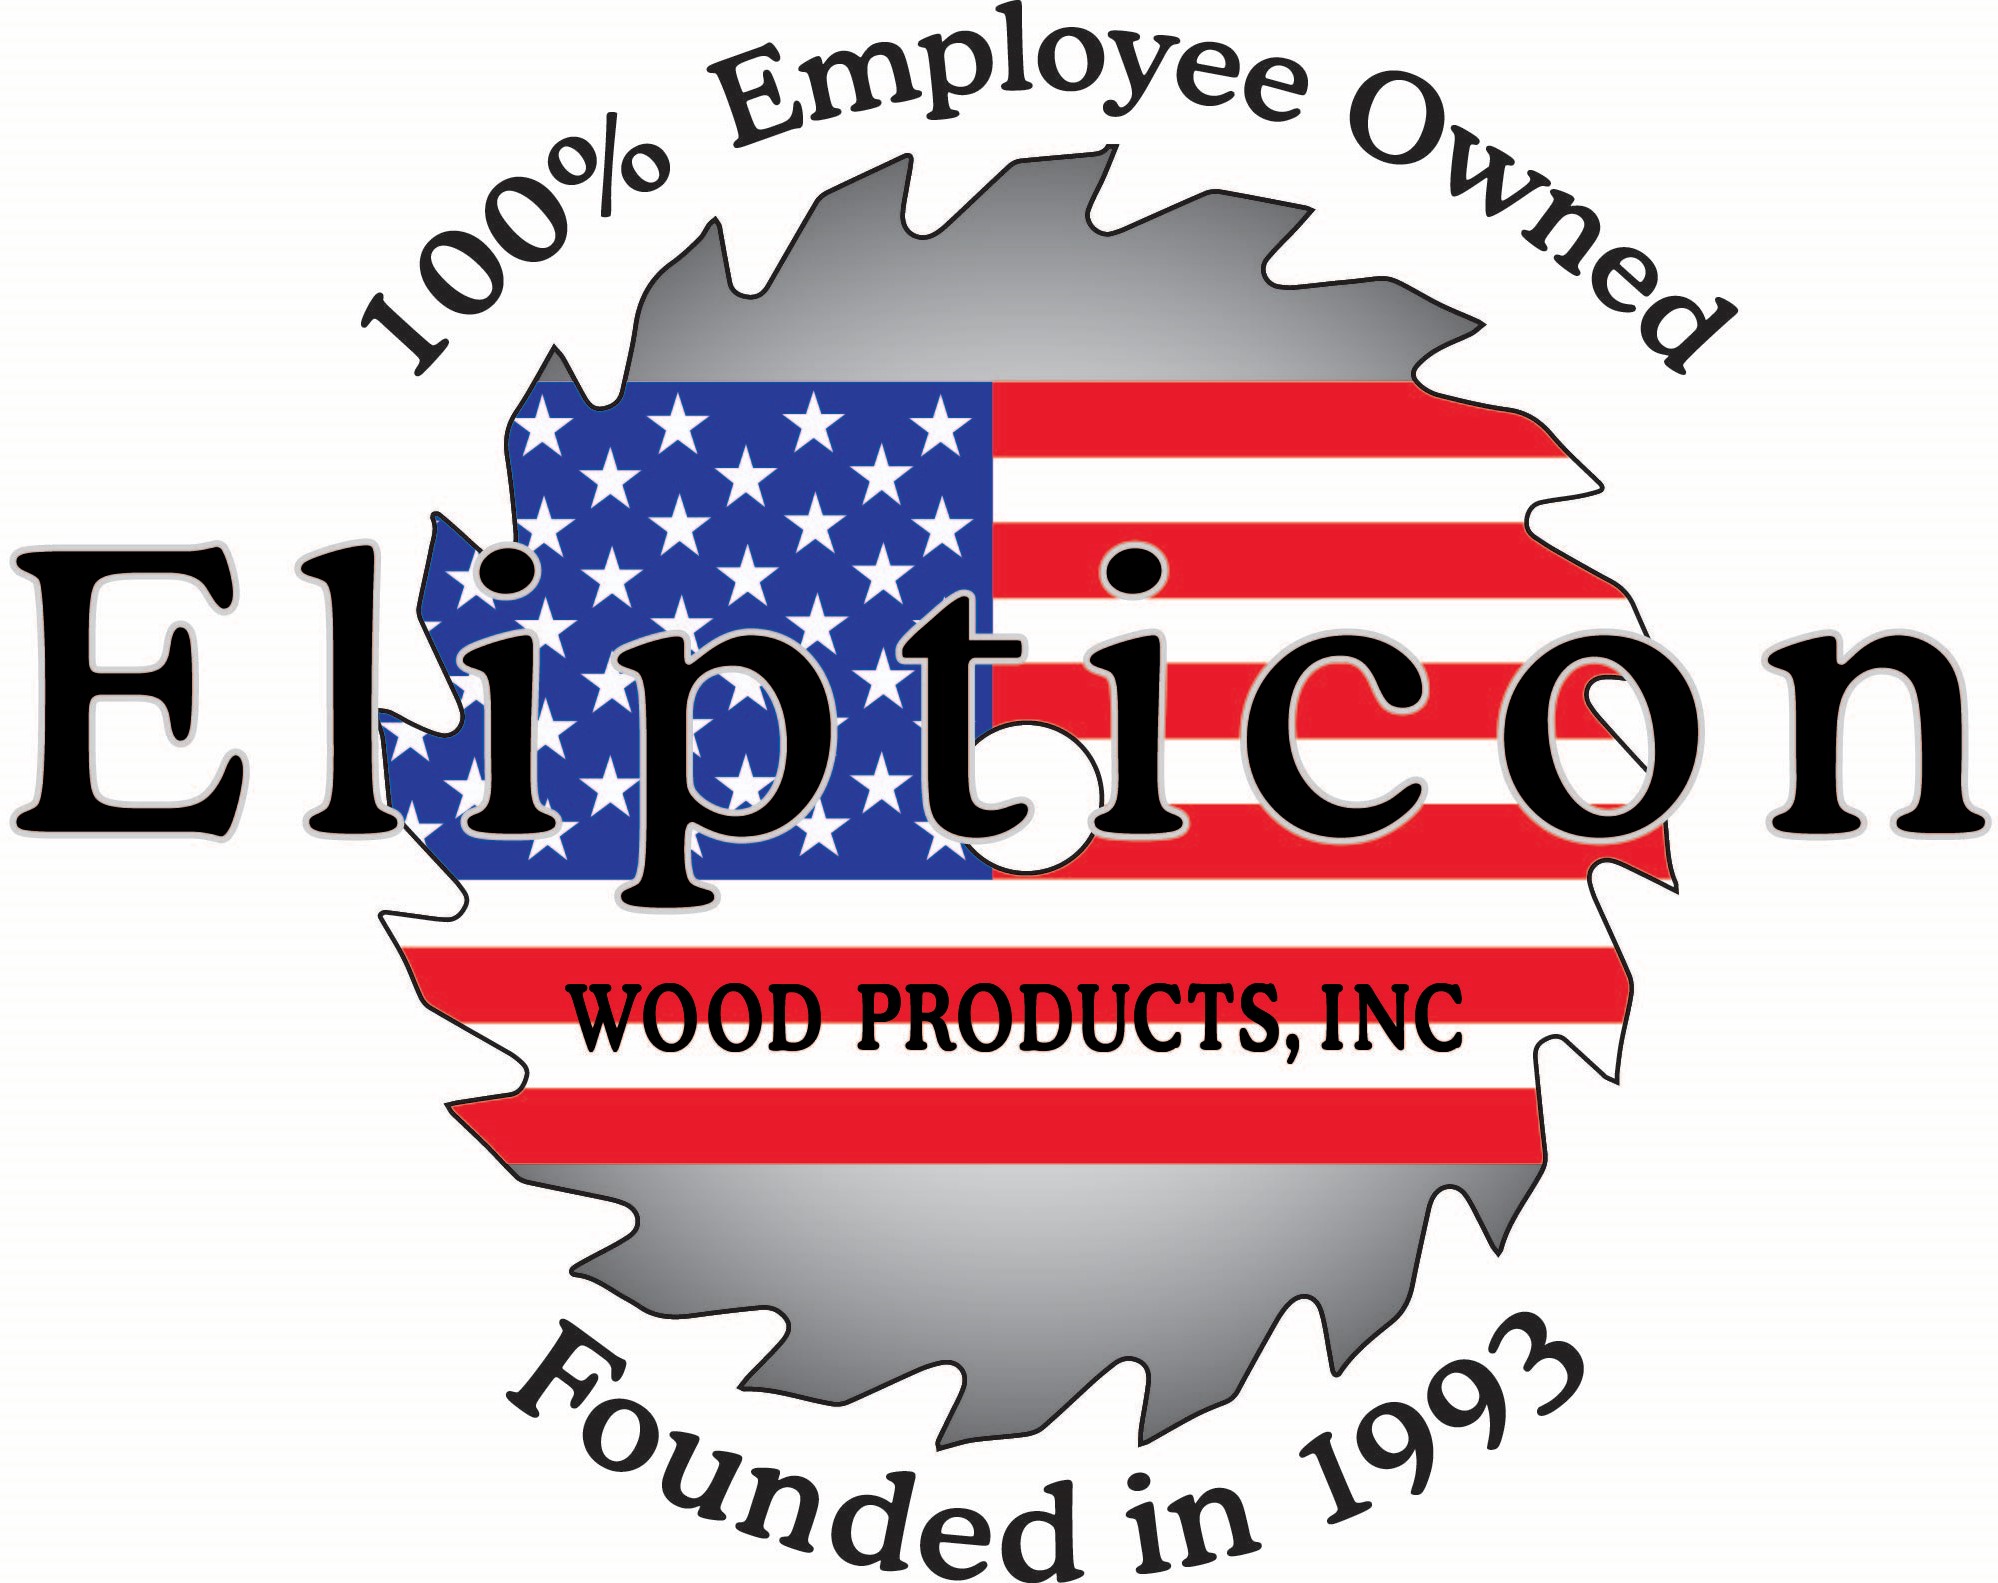 Elipticon Wood Products, Inc